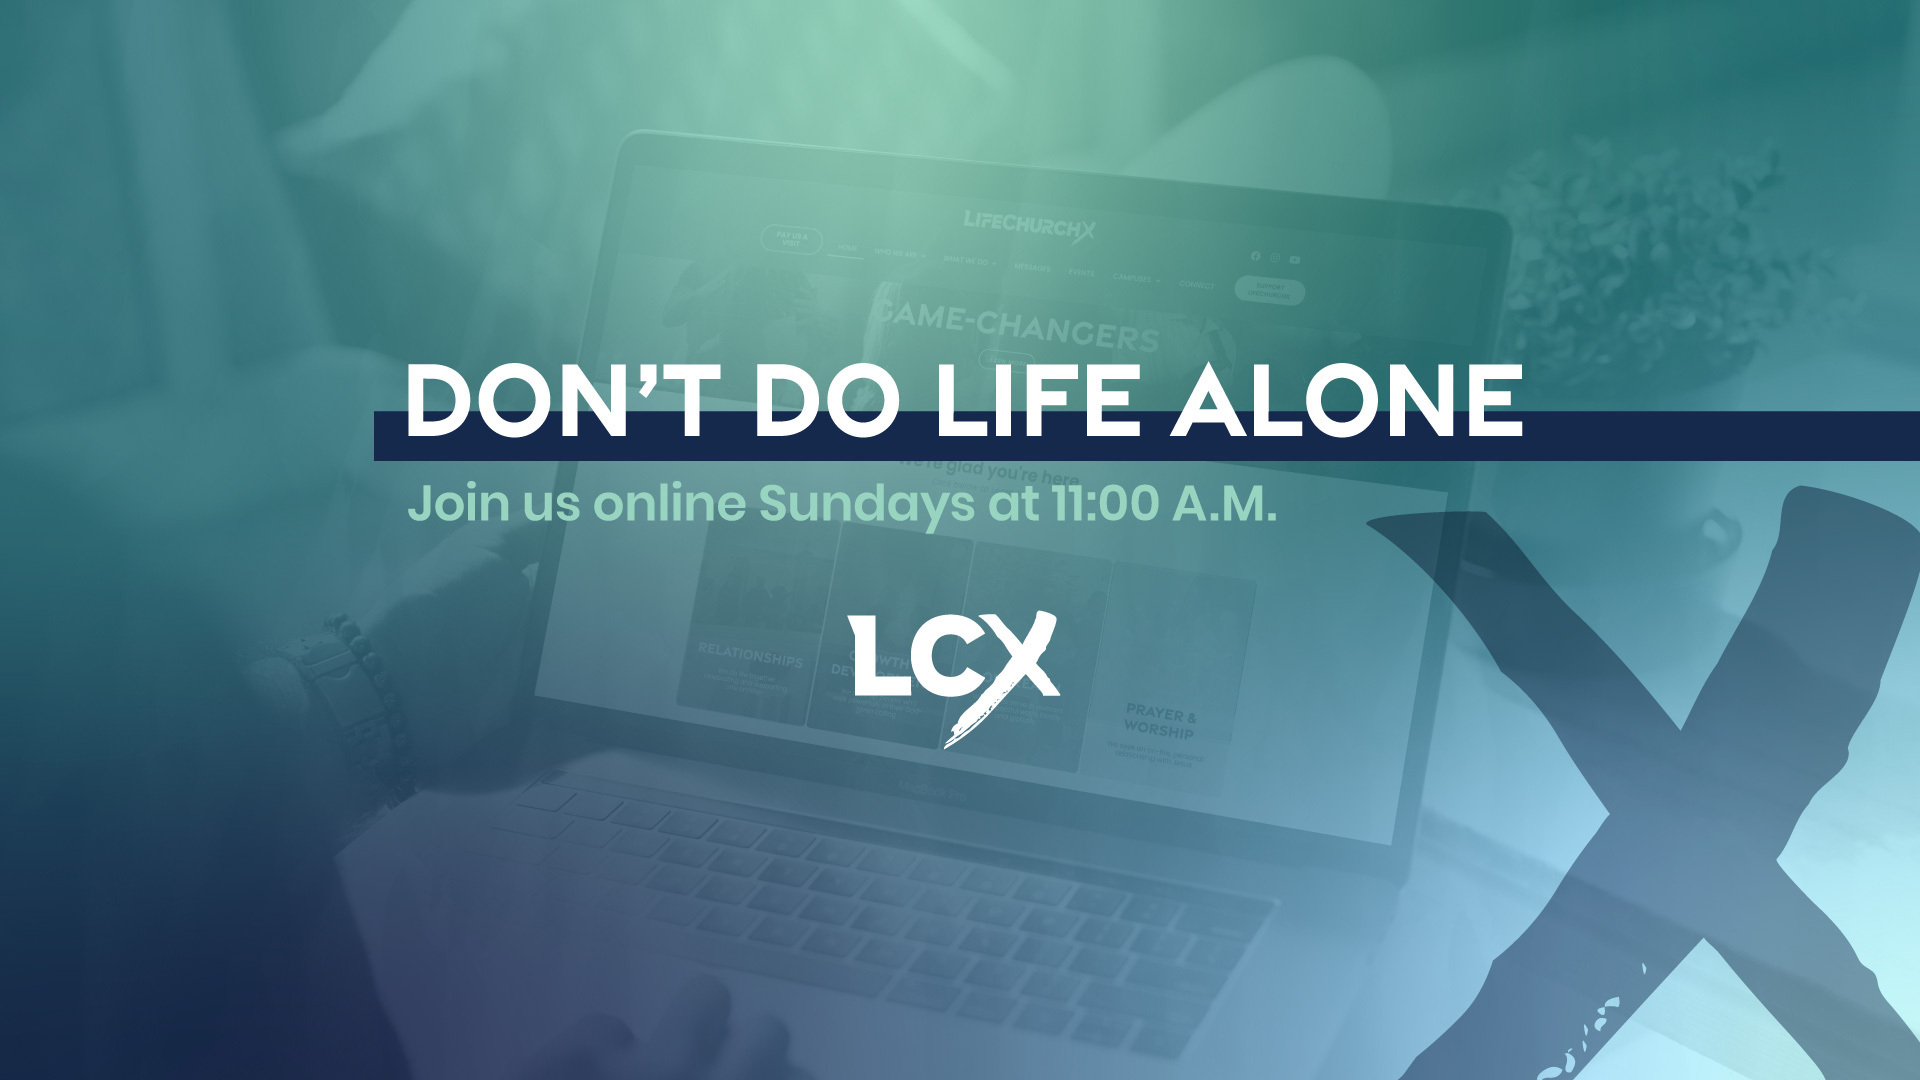 LifechurchX Online Sunday Church Service